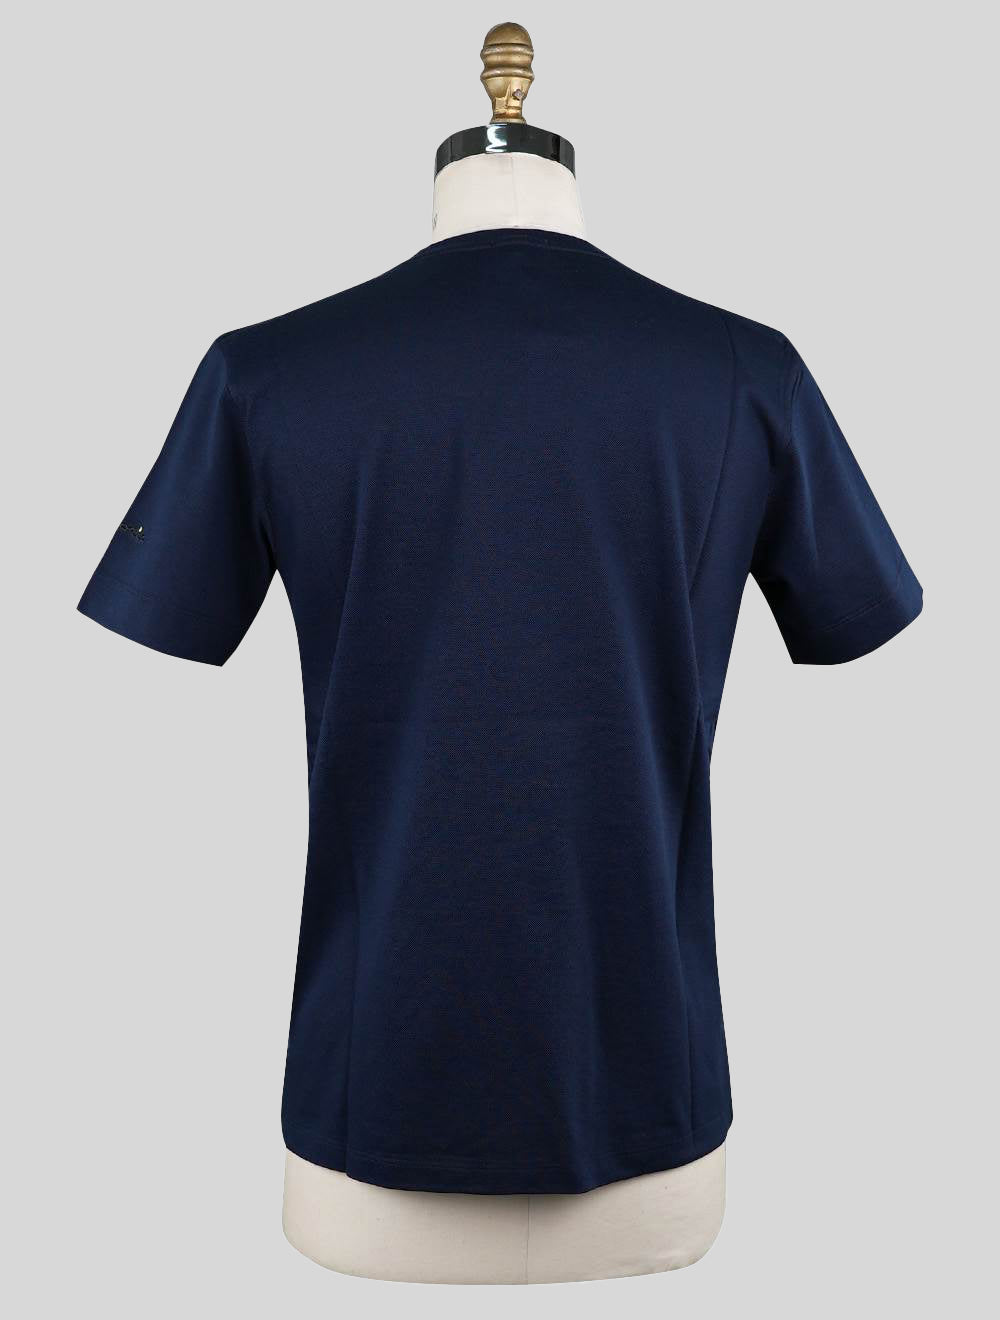 Sartorio Napoli camiseta azul de algodón